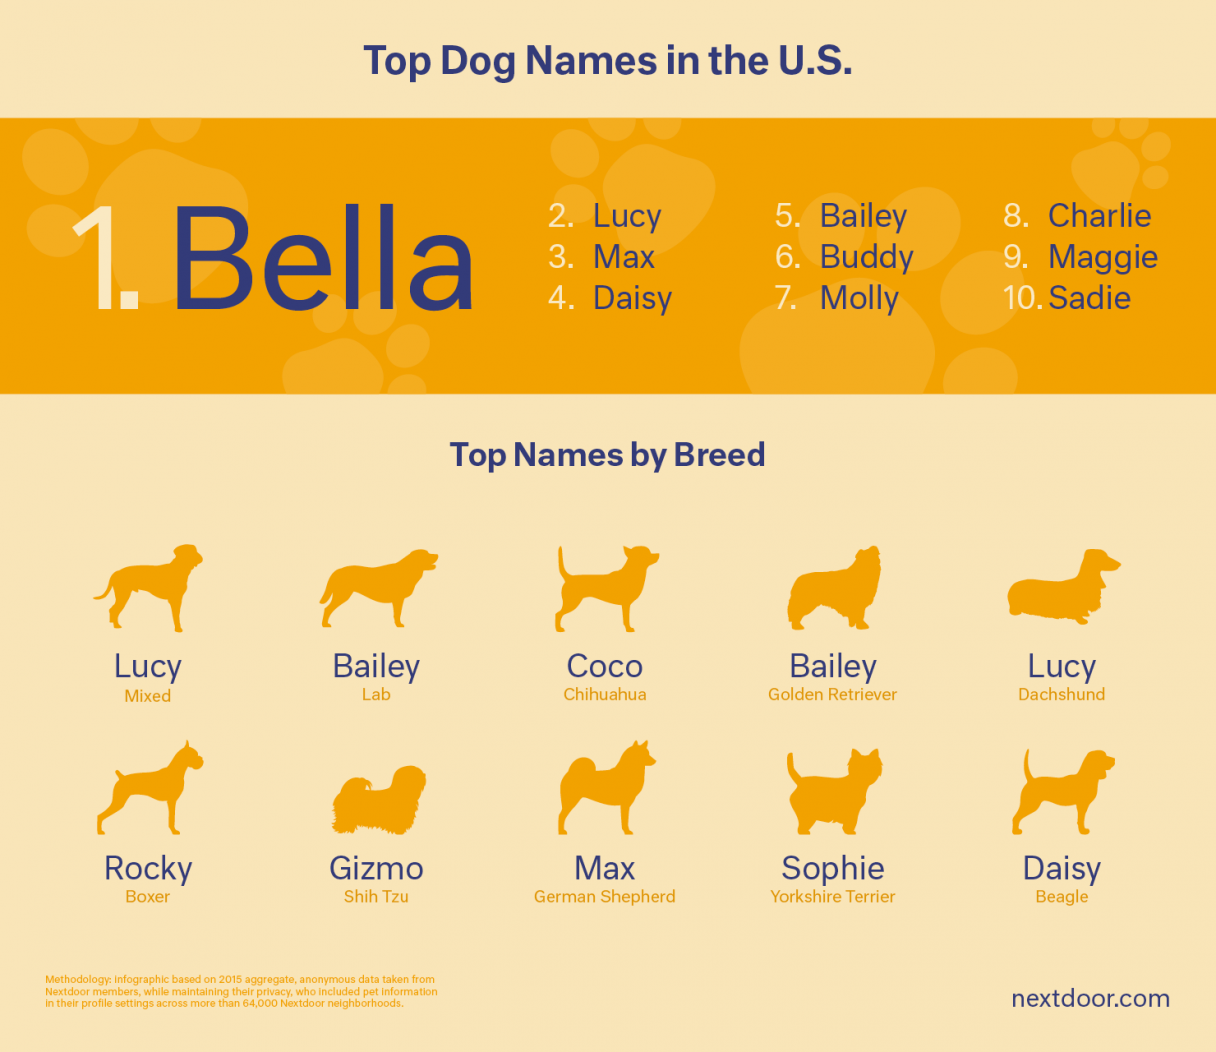 Choosing an AKC Dog Name